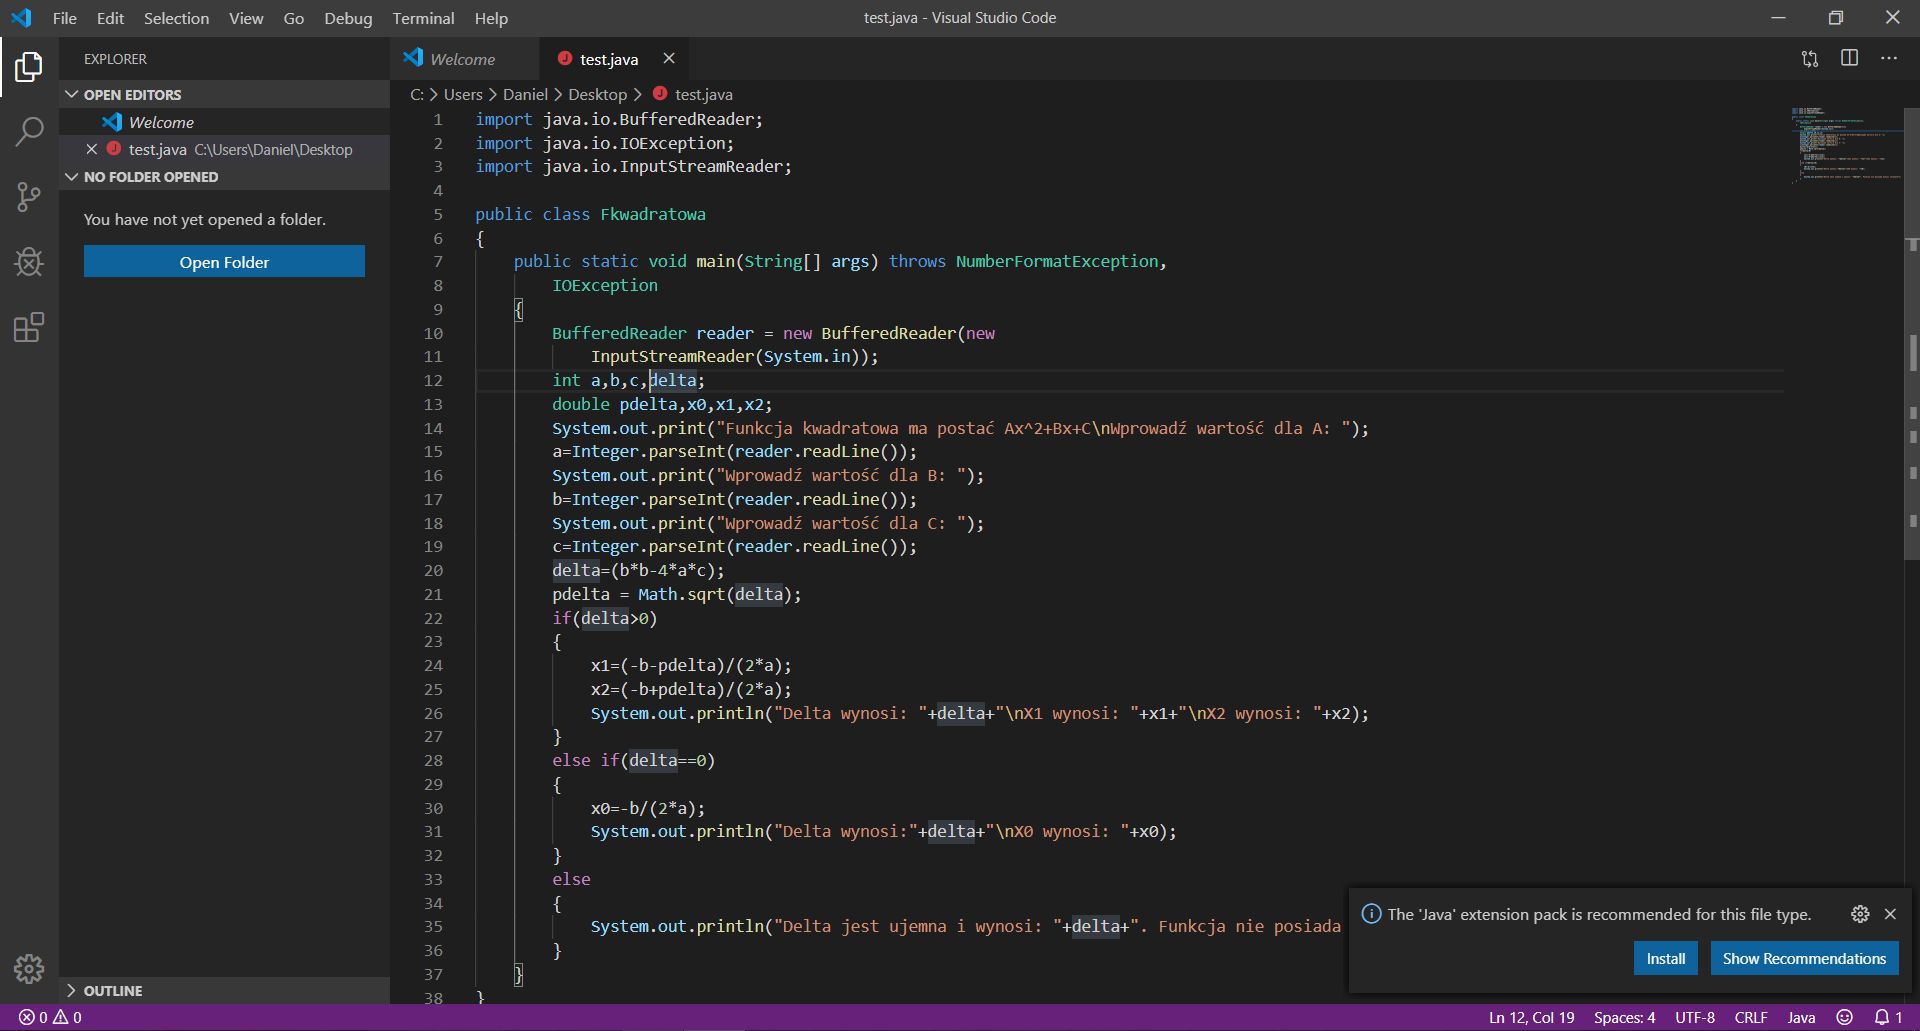 download the new version for windows Visual Studio Code 1.82.3